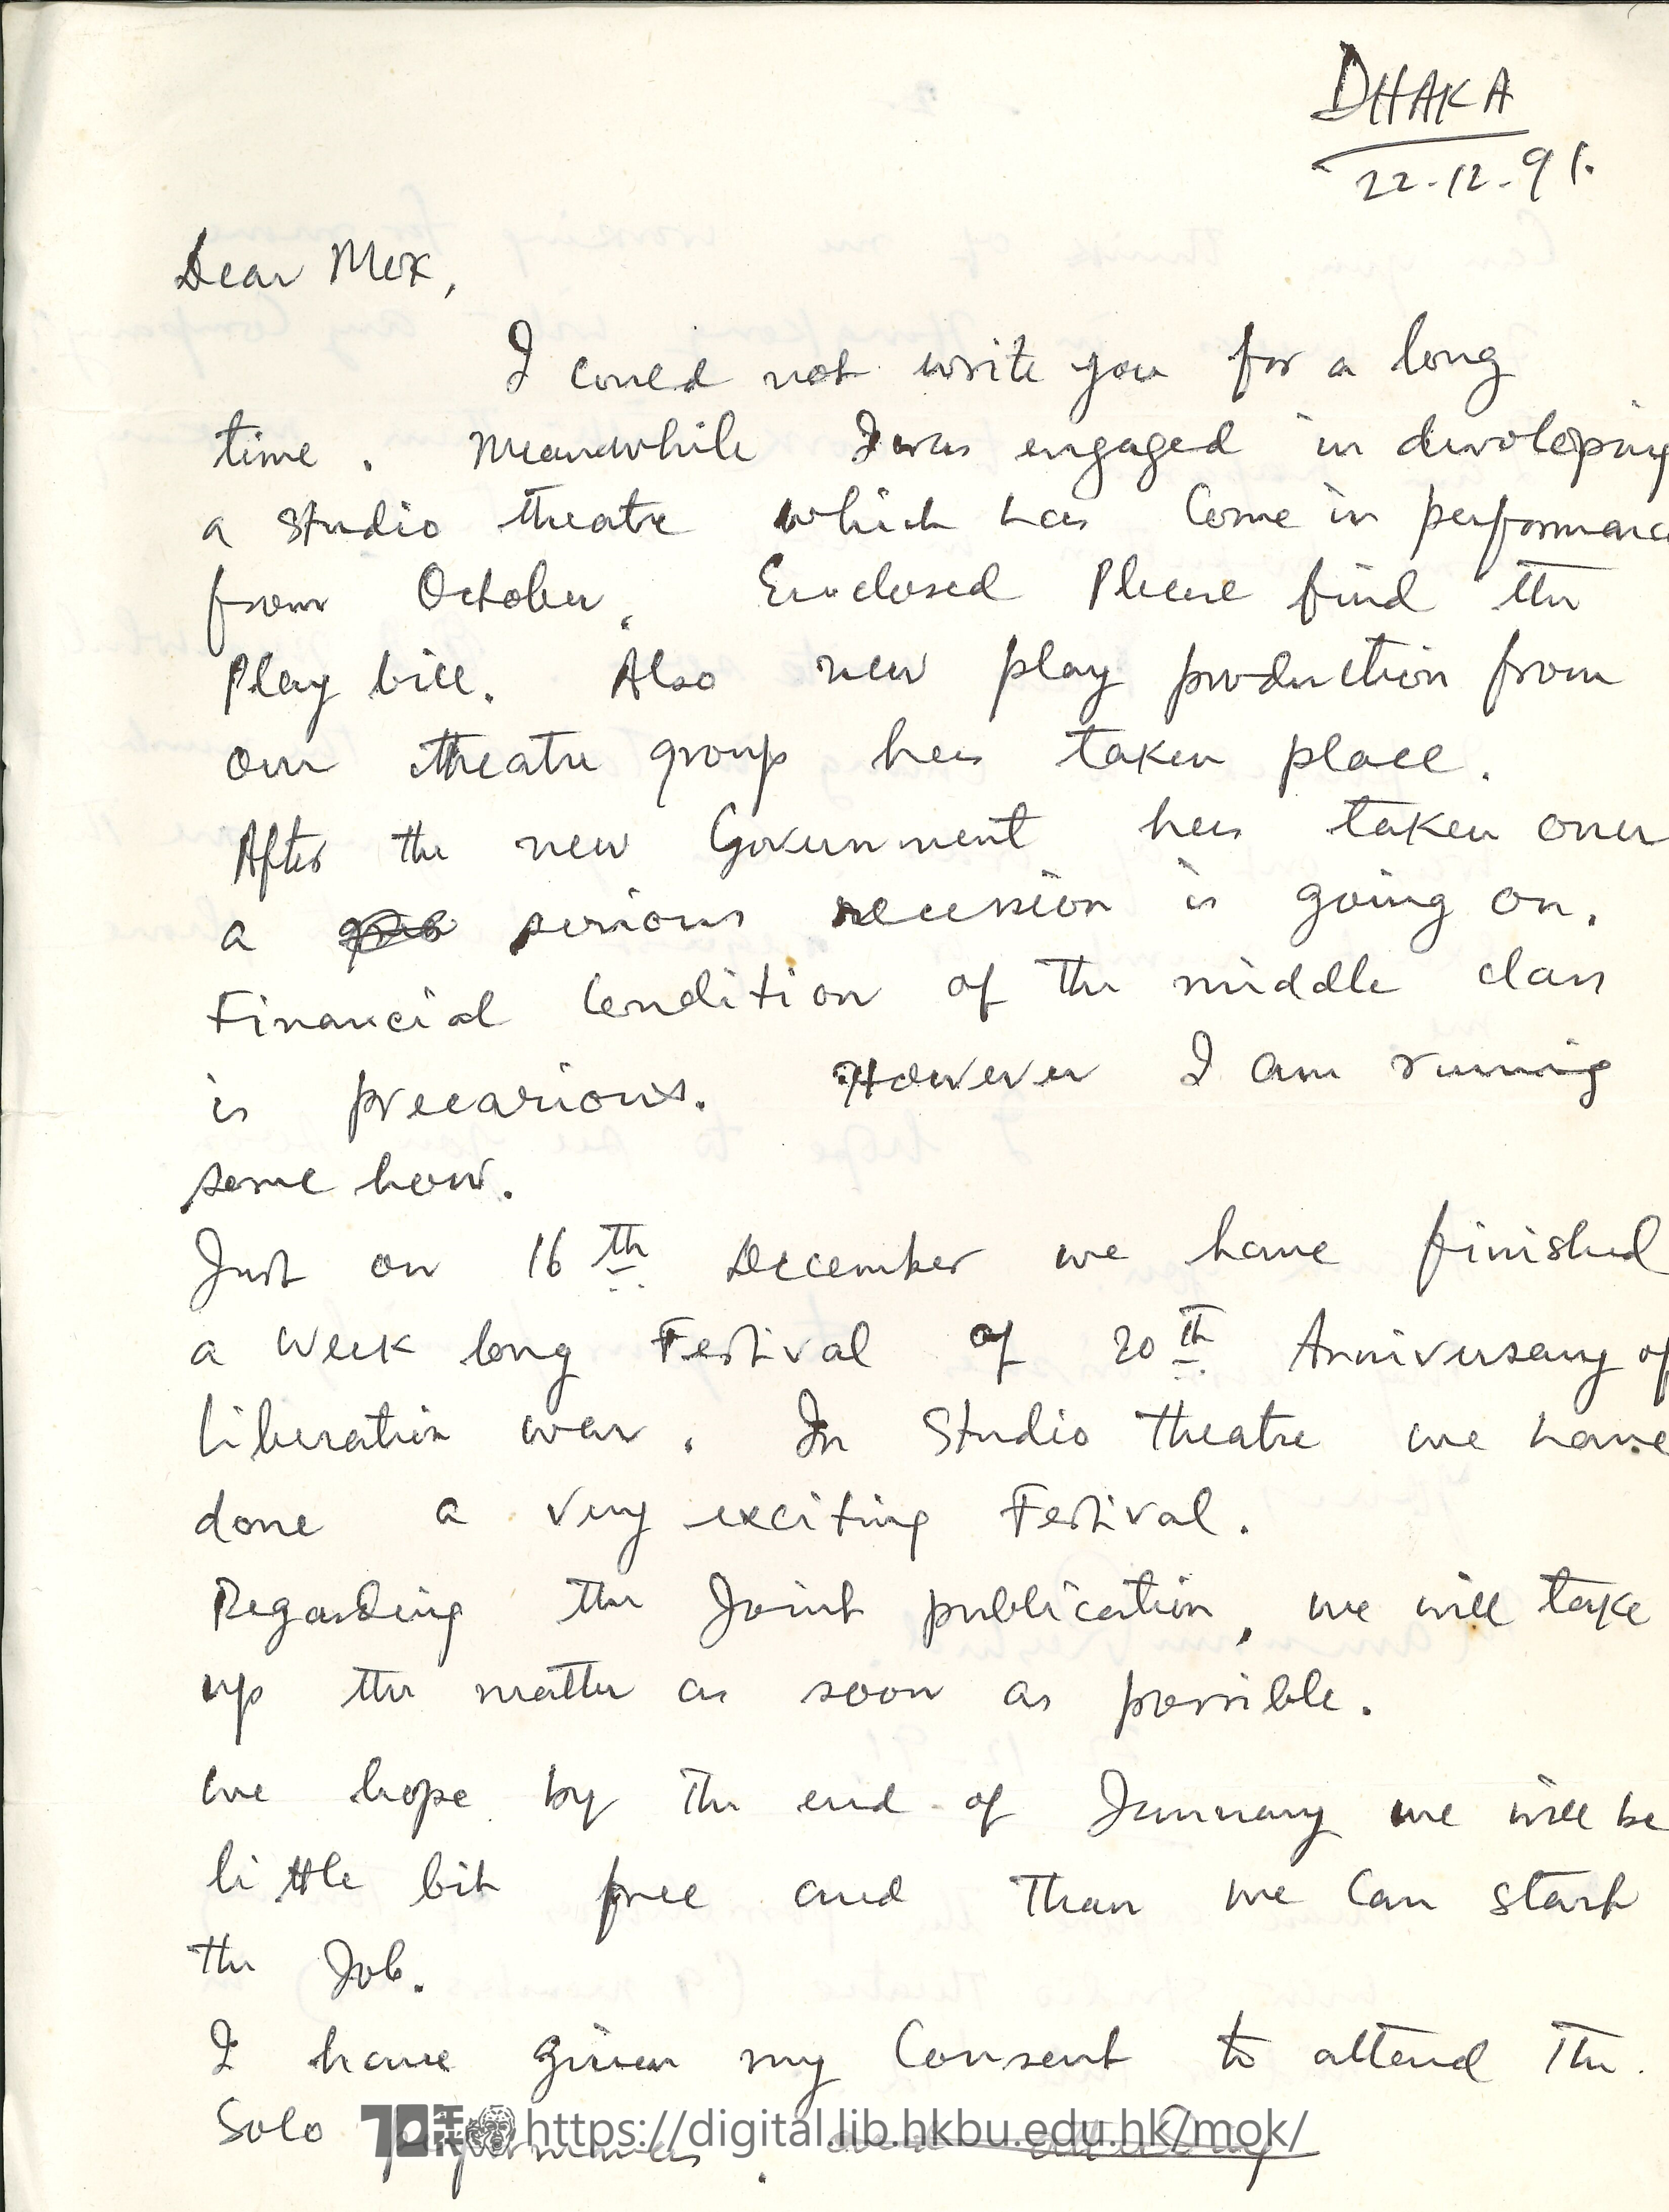   Letter from Mammur Rashid (Dhaka)  